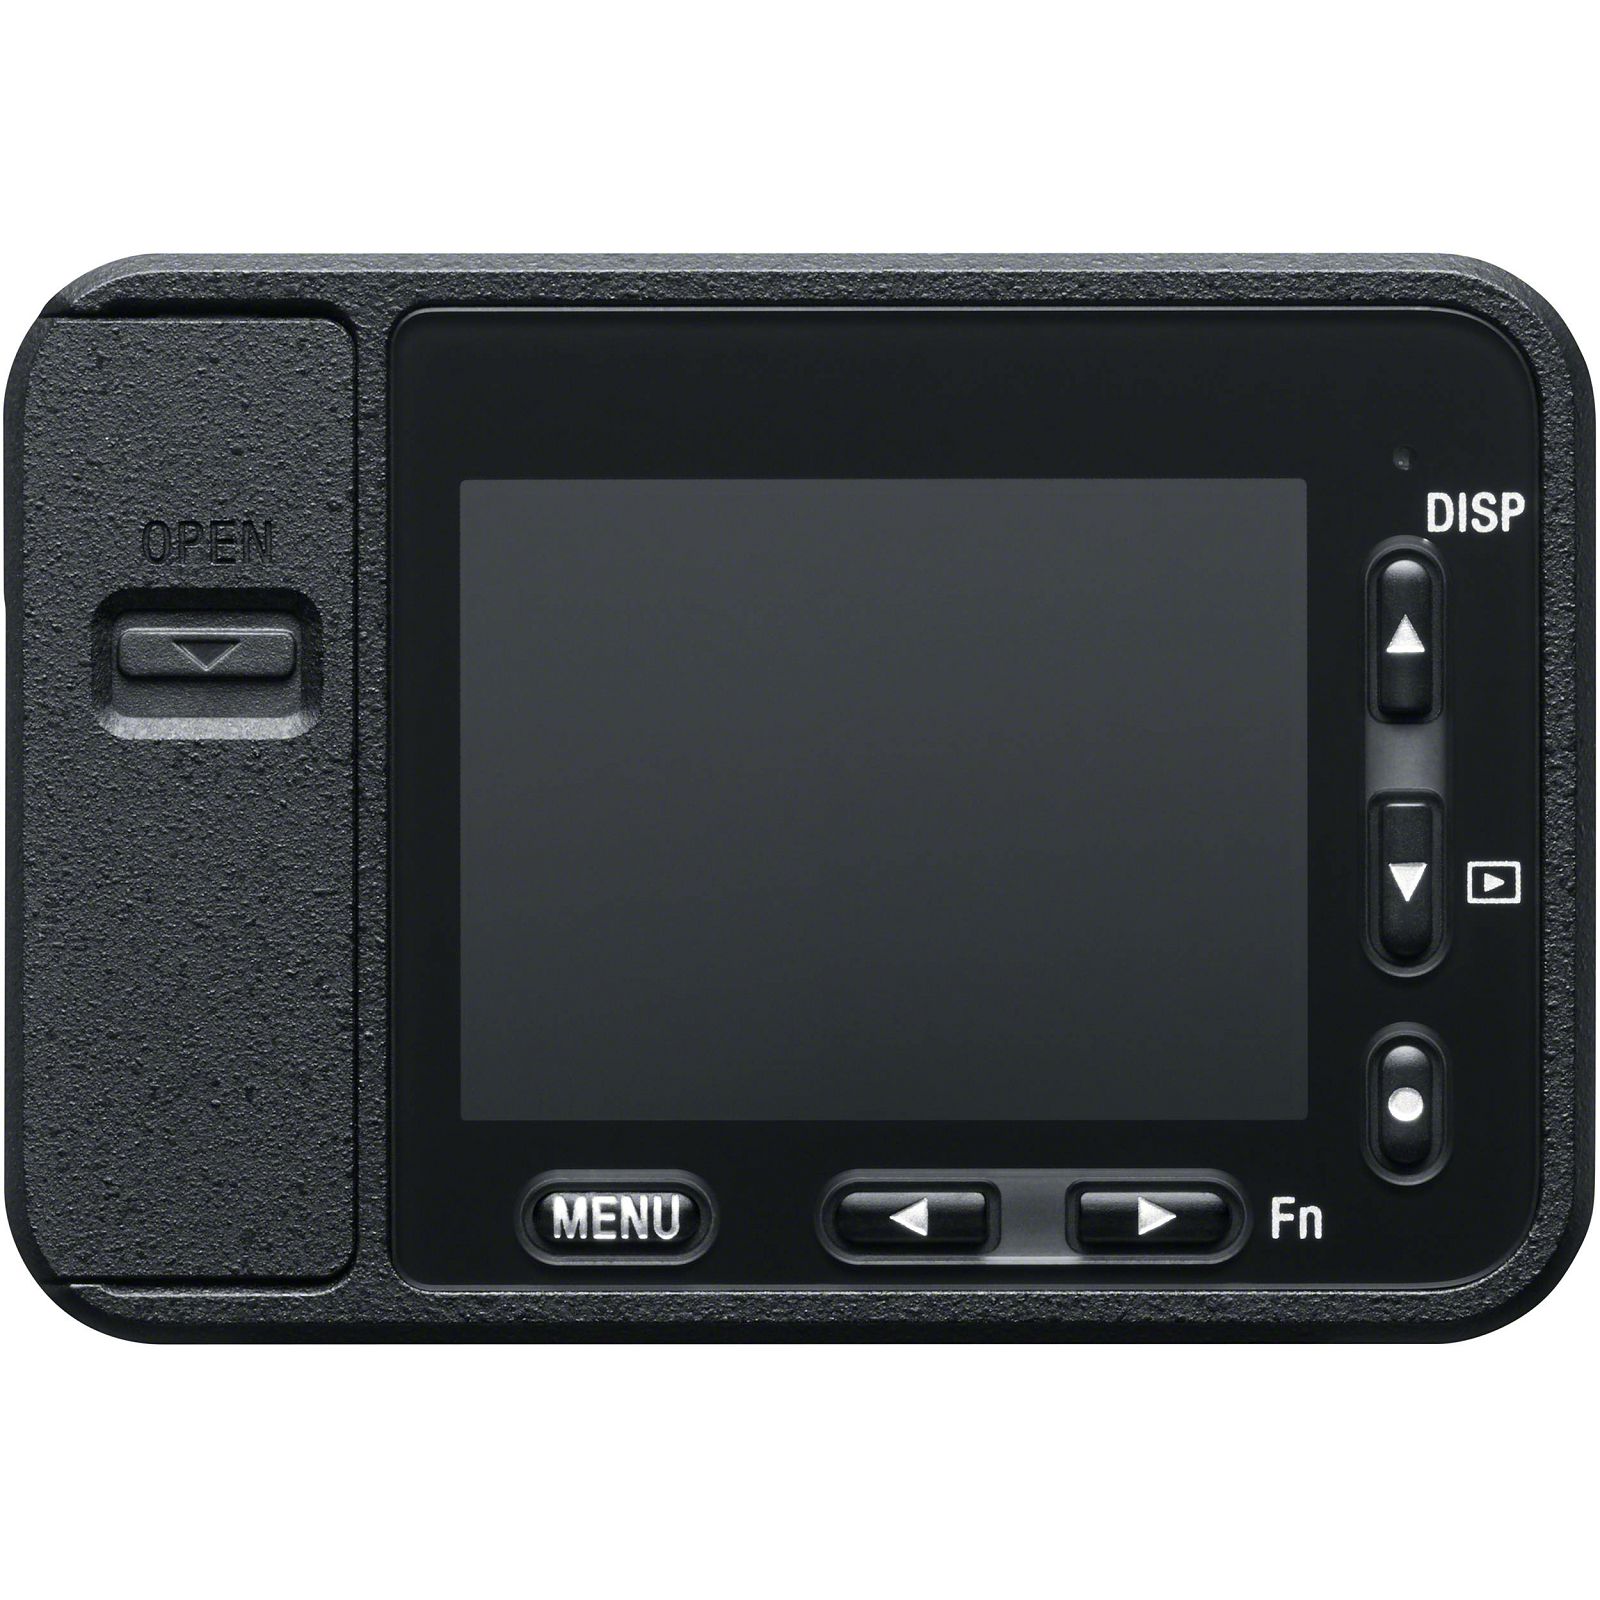 Sony DSC-RX0 15.3 MP sportska akcijska kamera vodootporna do 10m Ultra-Compact Waterproof Shockproof Camera ActionCam RX0 s objektivom Zeiss Tessar 24mm f/4 Exmor RS DSCRX0 (DSCRX0.CEE)